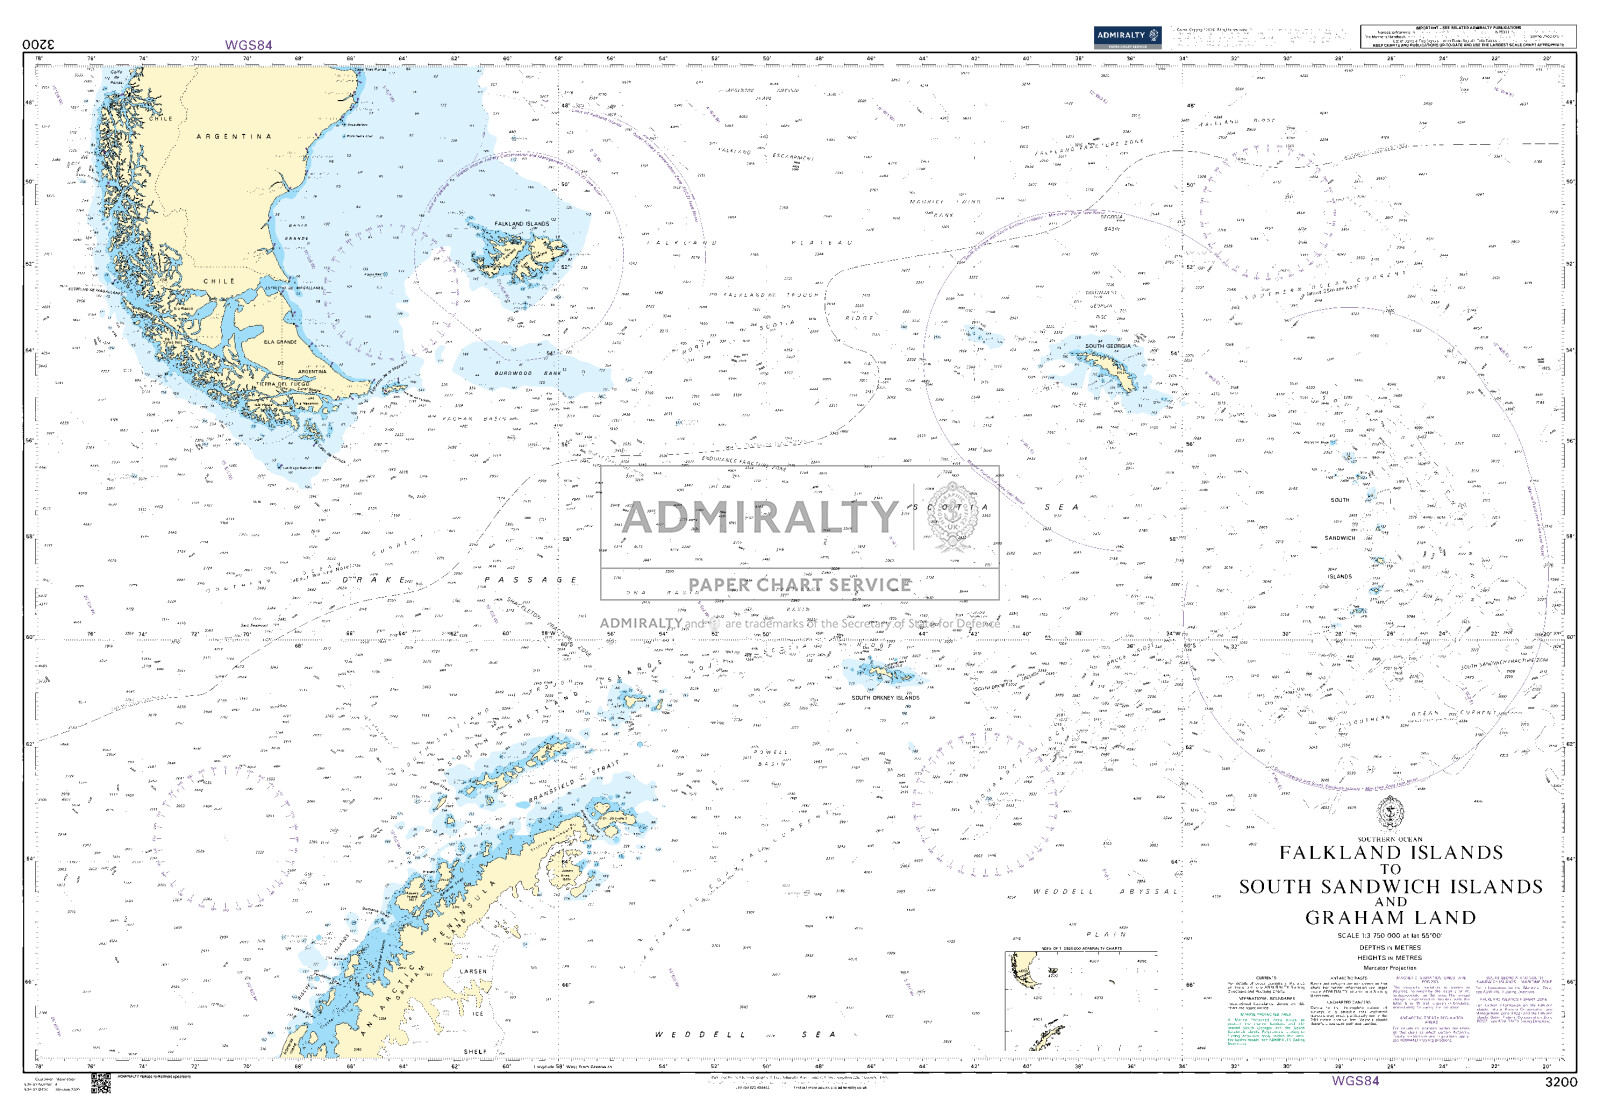 Falkland Islands to South Sandwich Islands and Graham Land. UKHO3200